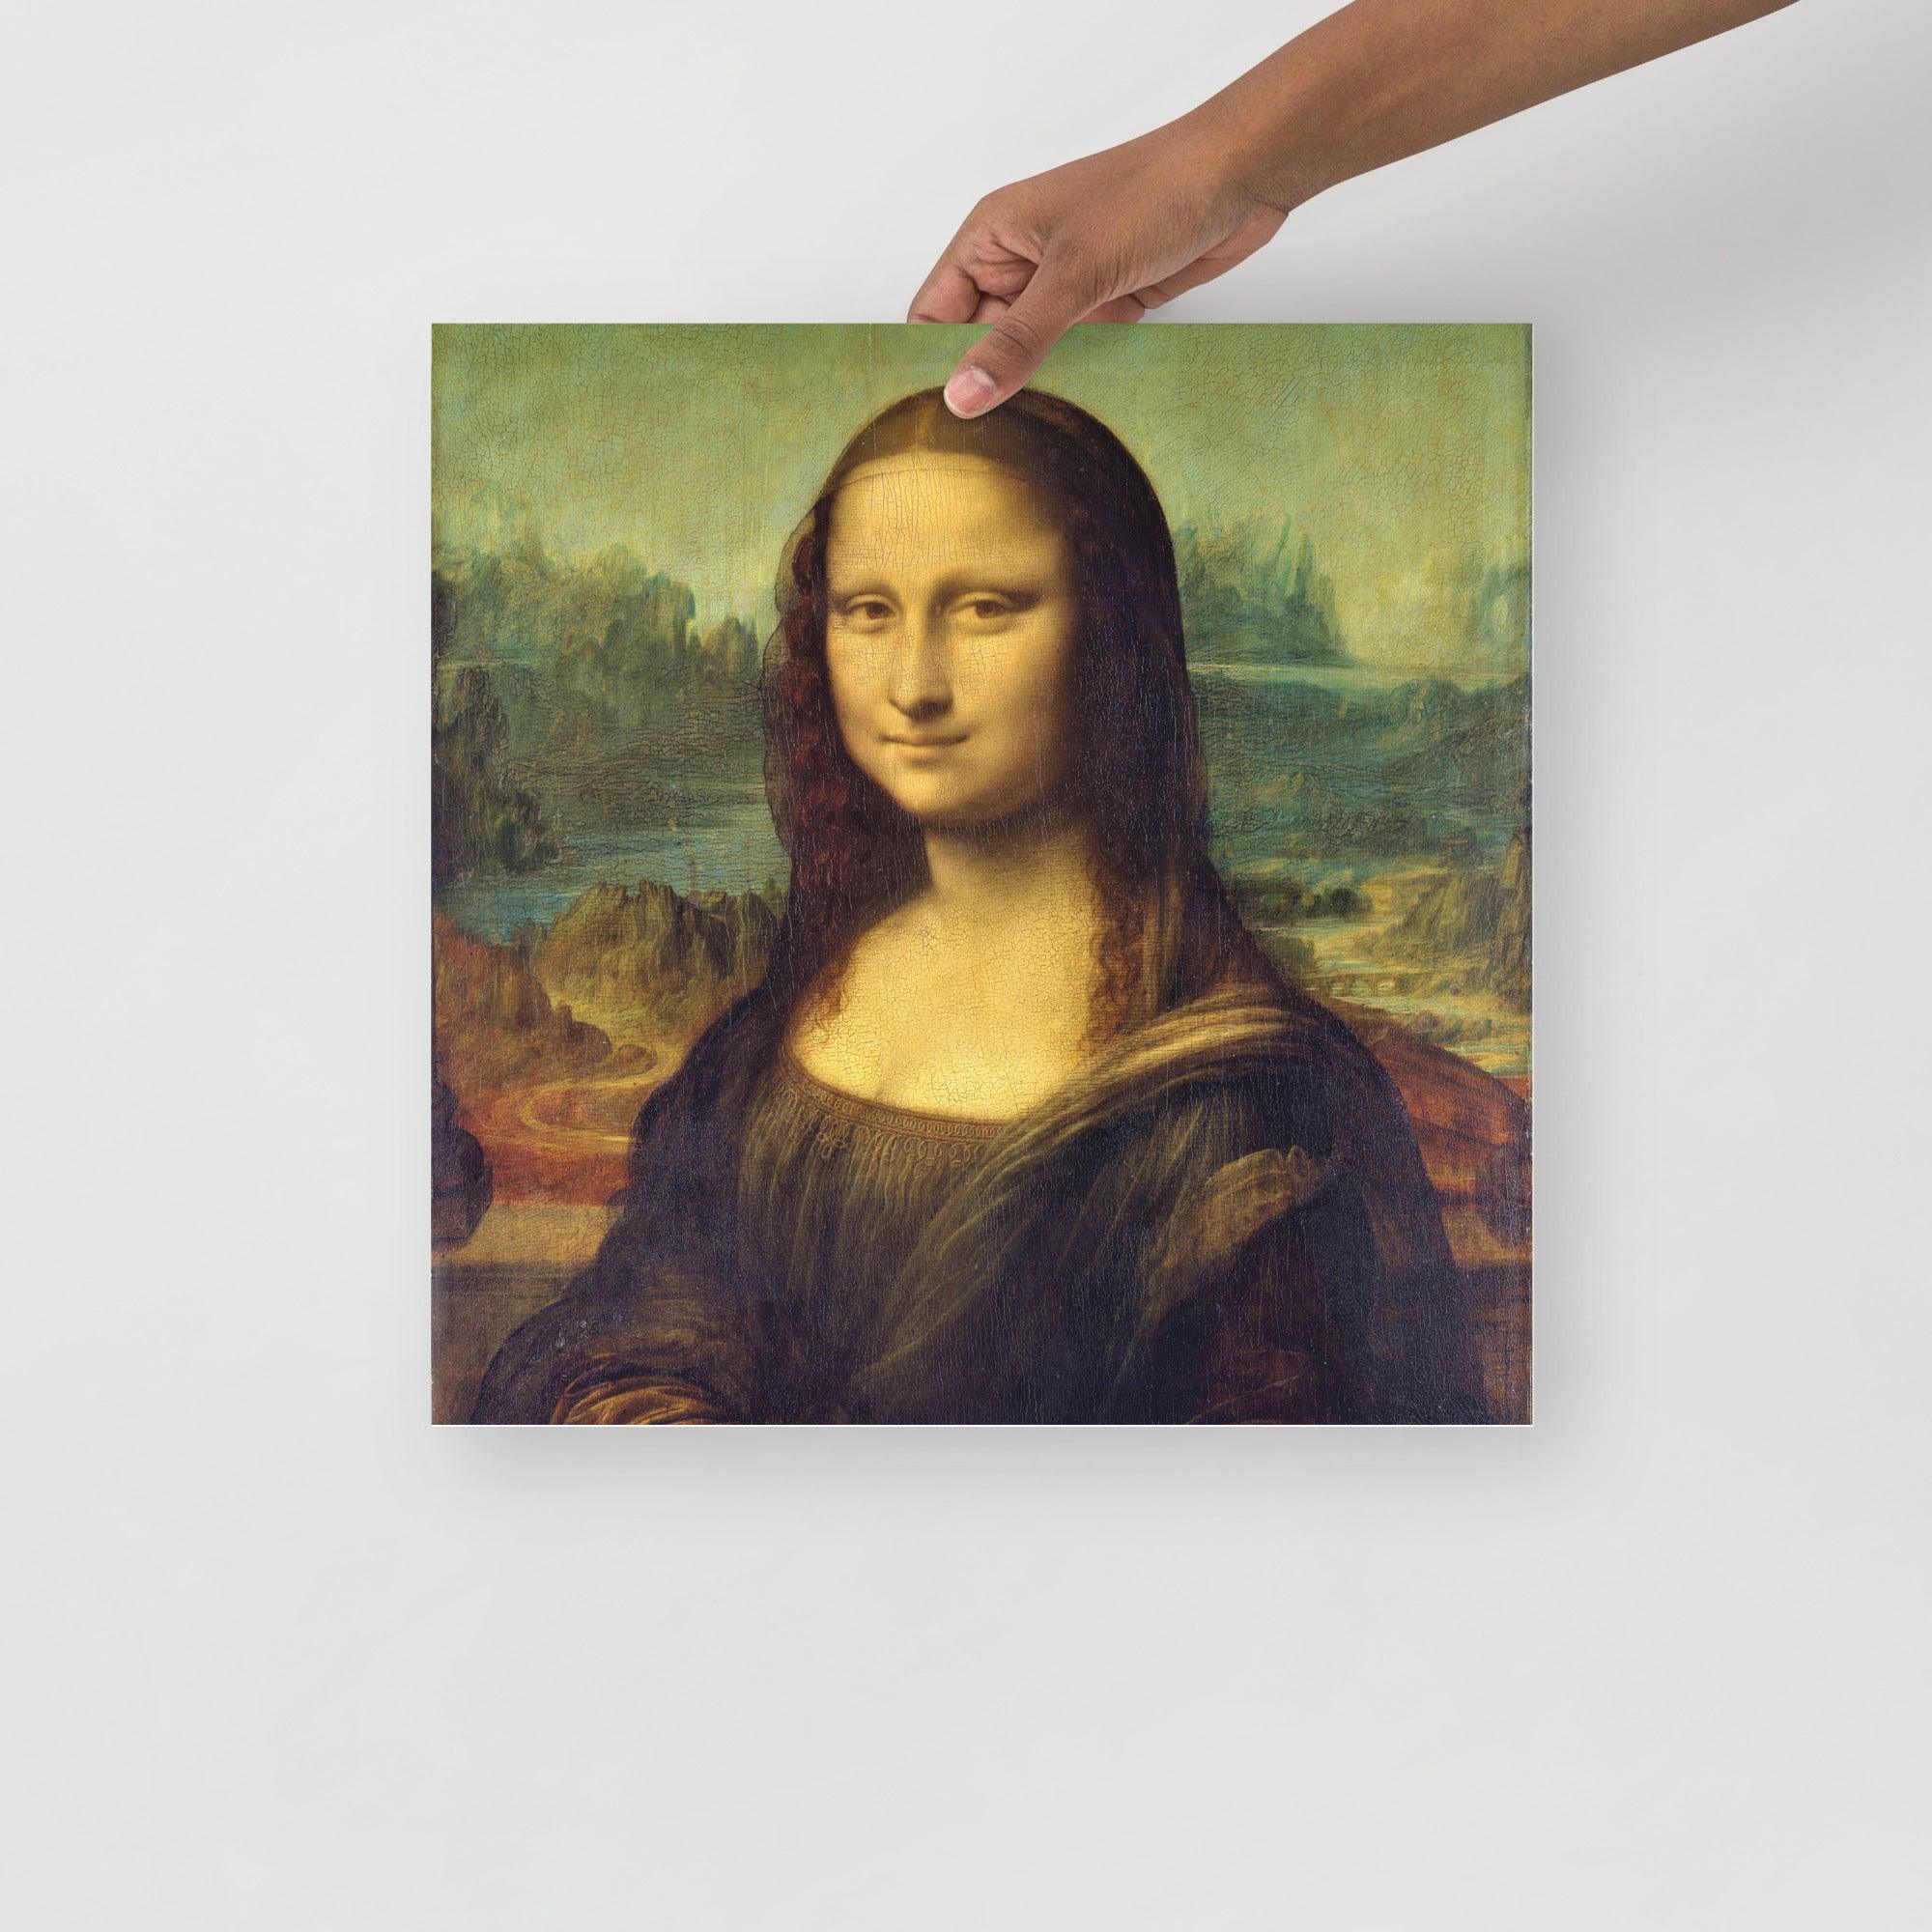 A Mona Lisa by Leonardo Da Vinci poster on a plain backdrop in size 16x16”.